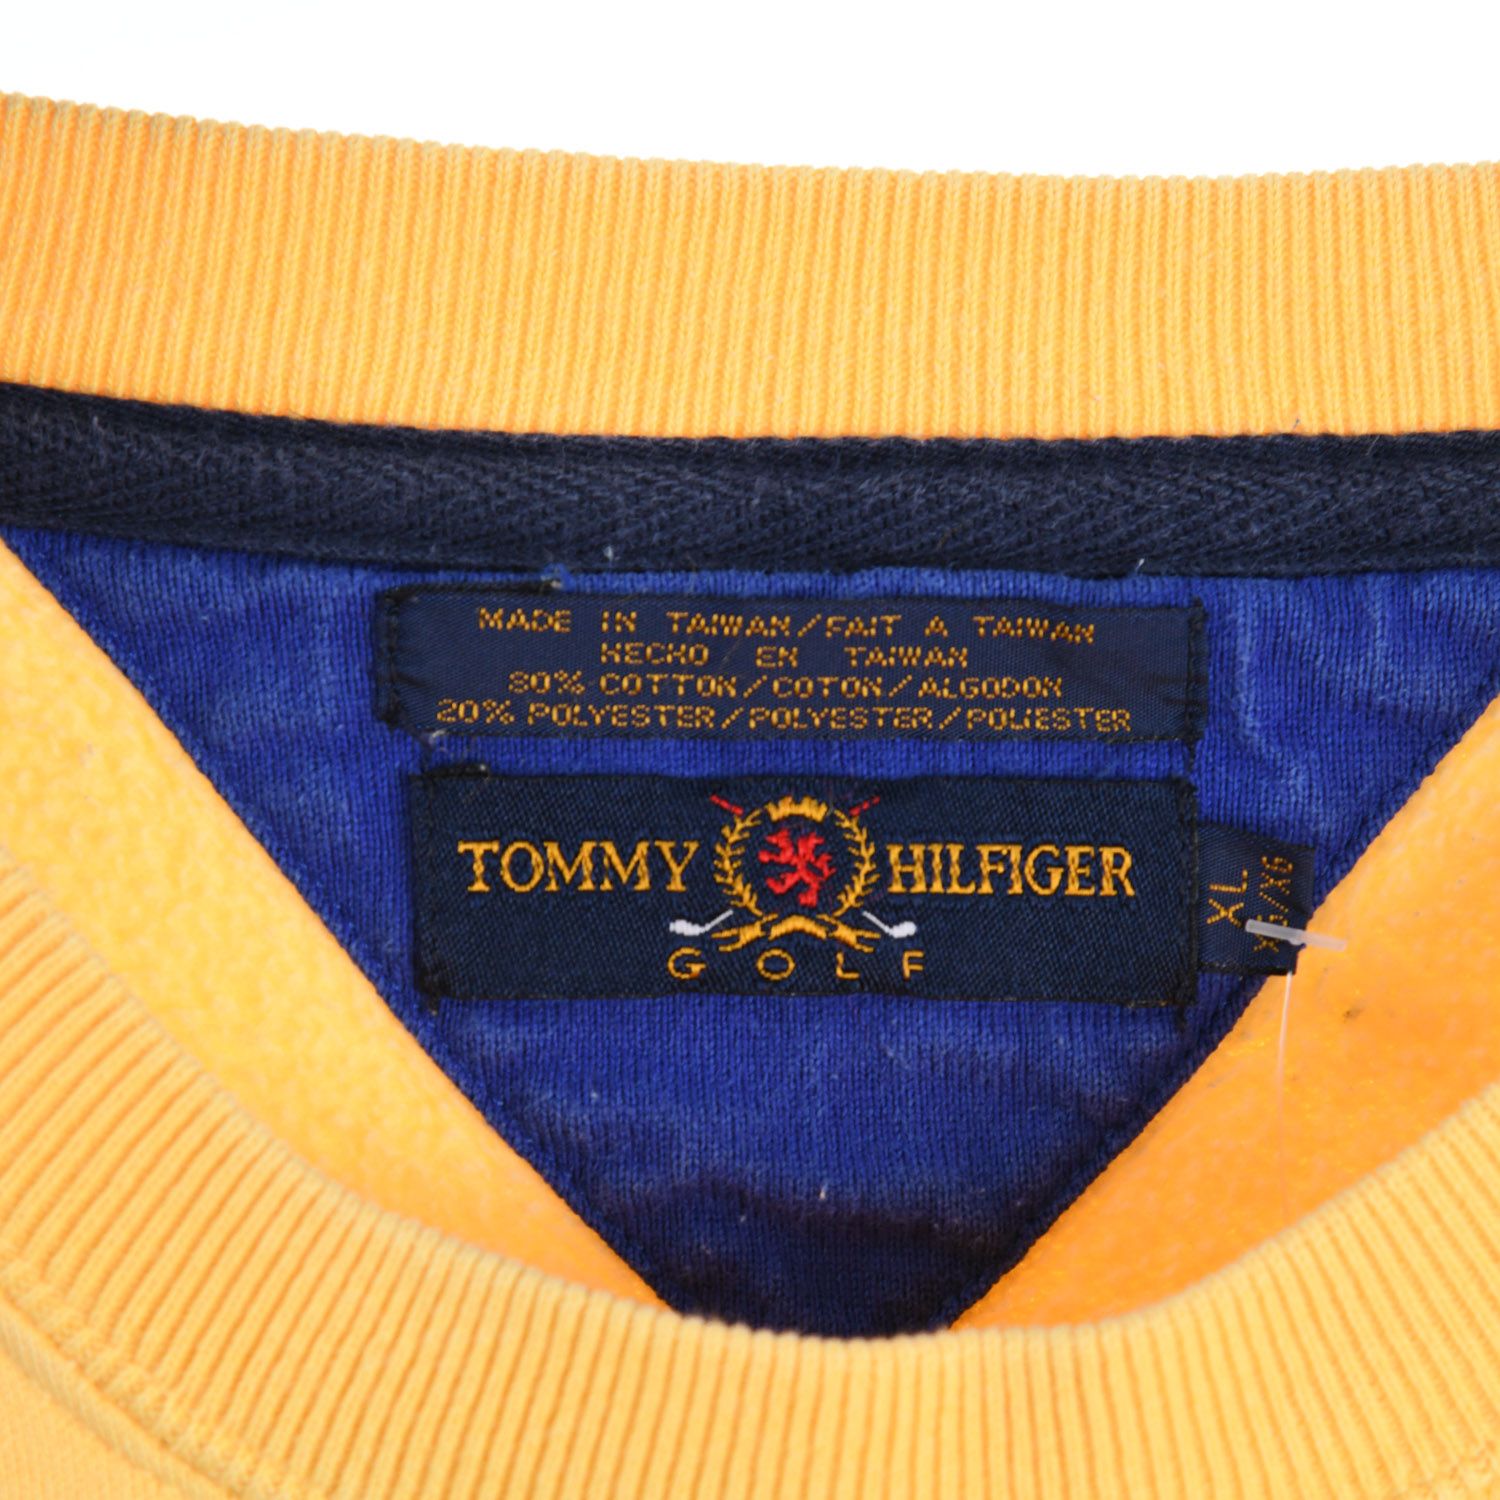 Tommy Hilfiger Sweatshirt (Embroidered Flag on Cuff)